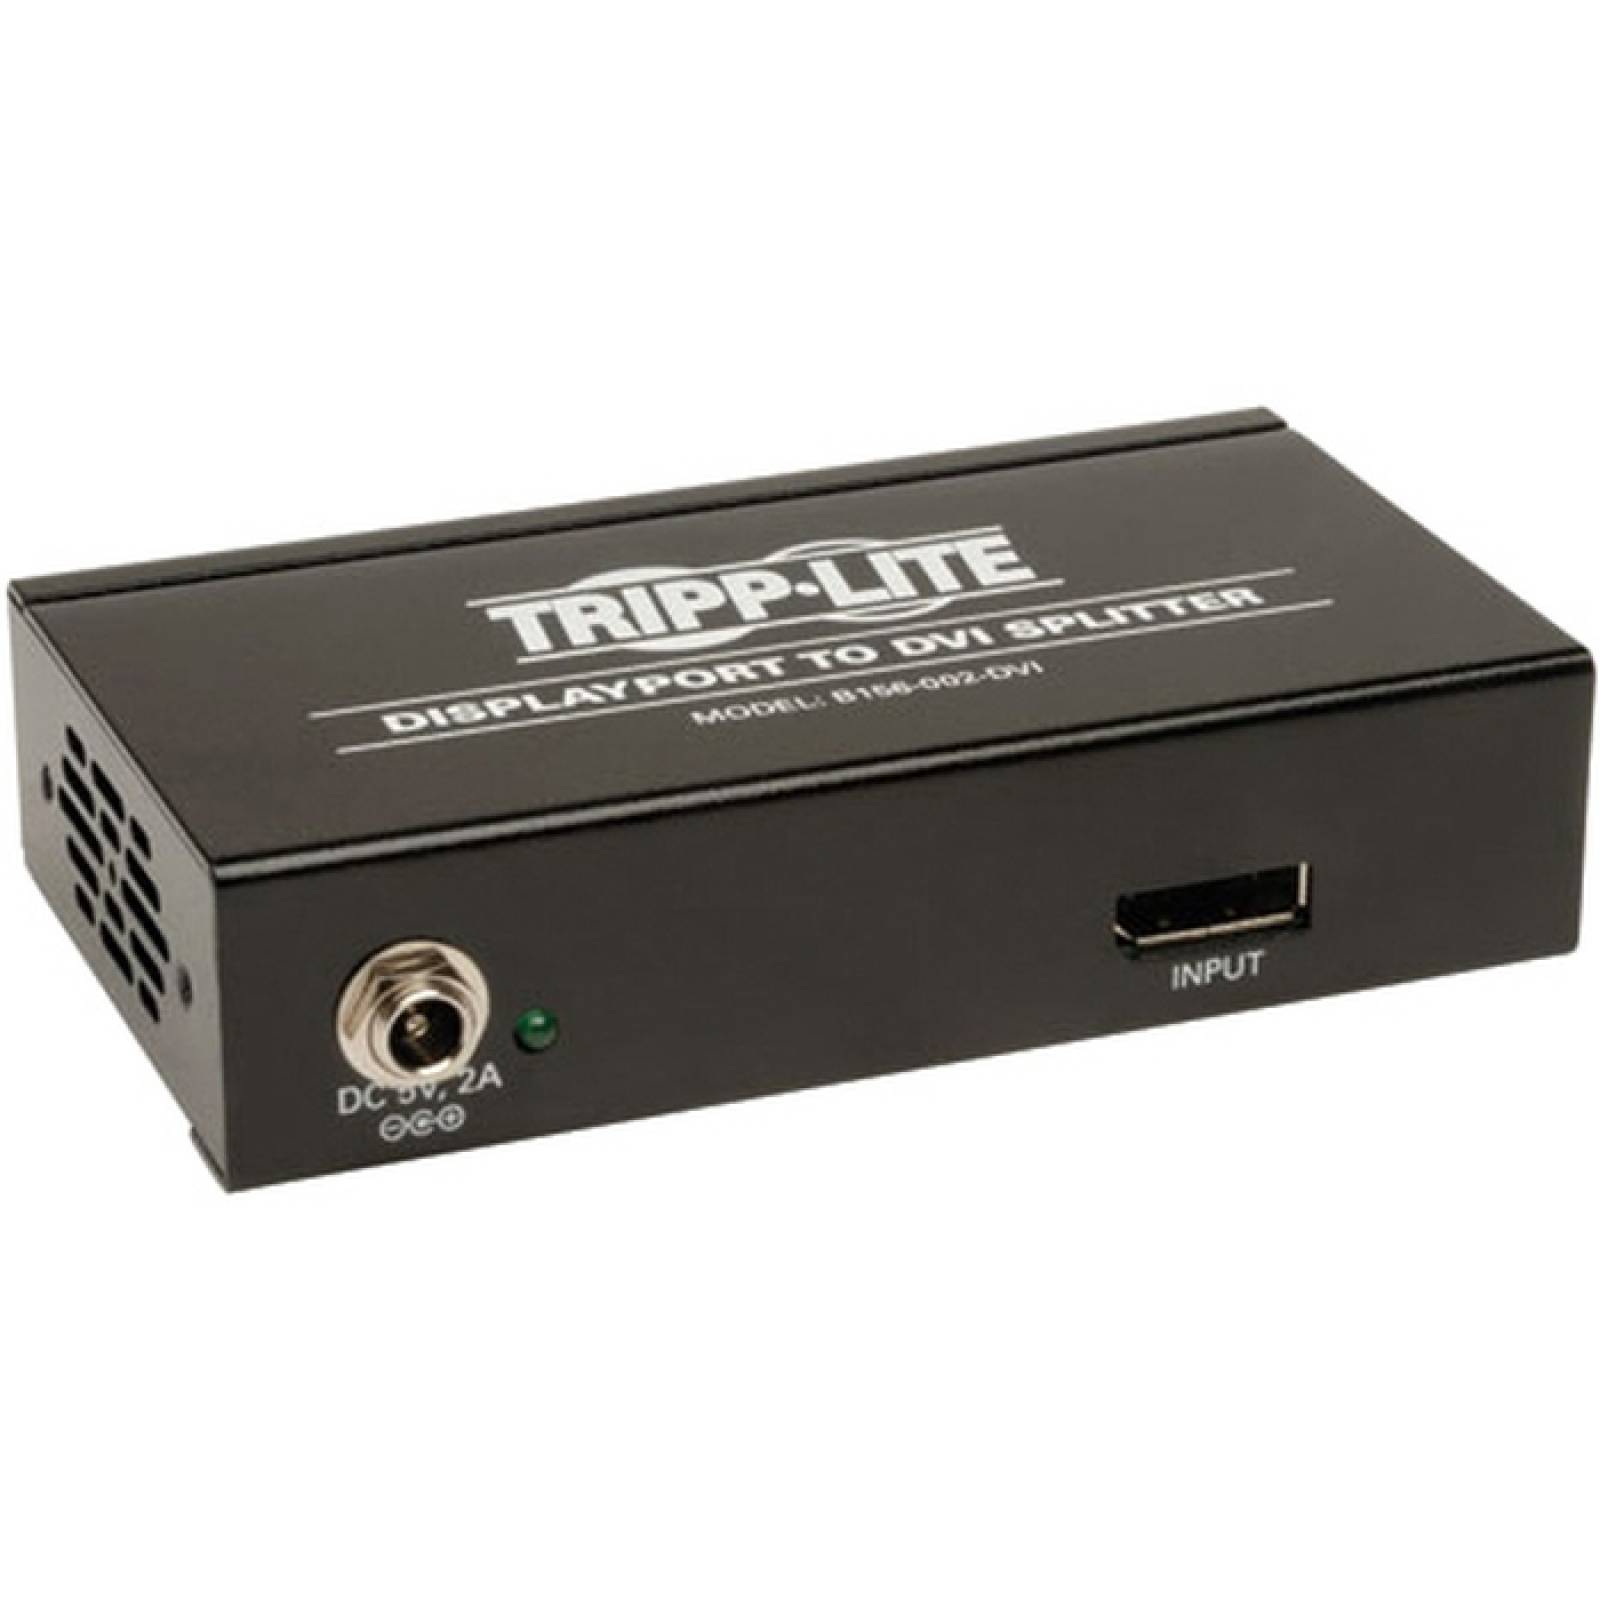 Tripp Lite Display de video de 2 puertos a 2 X DVI Monitor Video Splitter TAA GSA